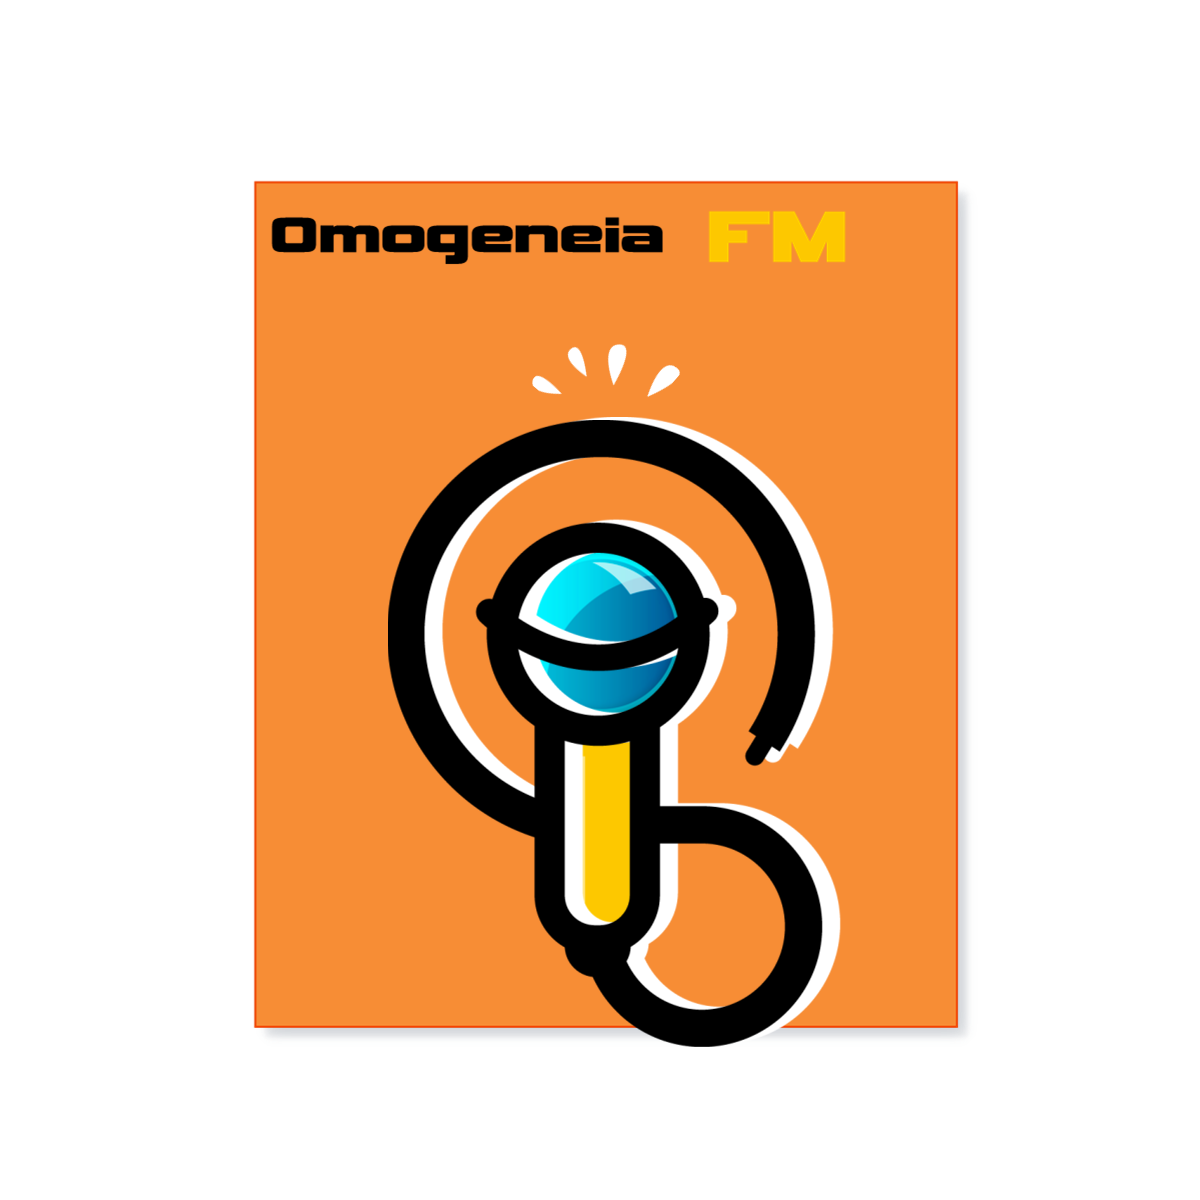 Omogeneia FM